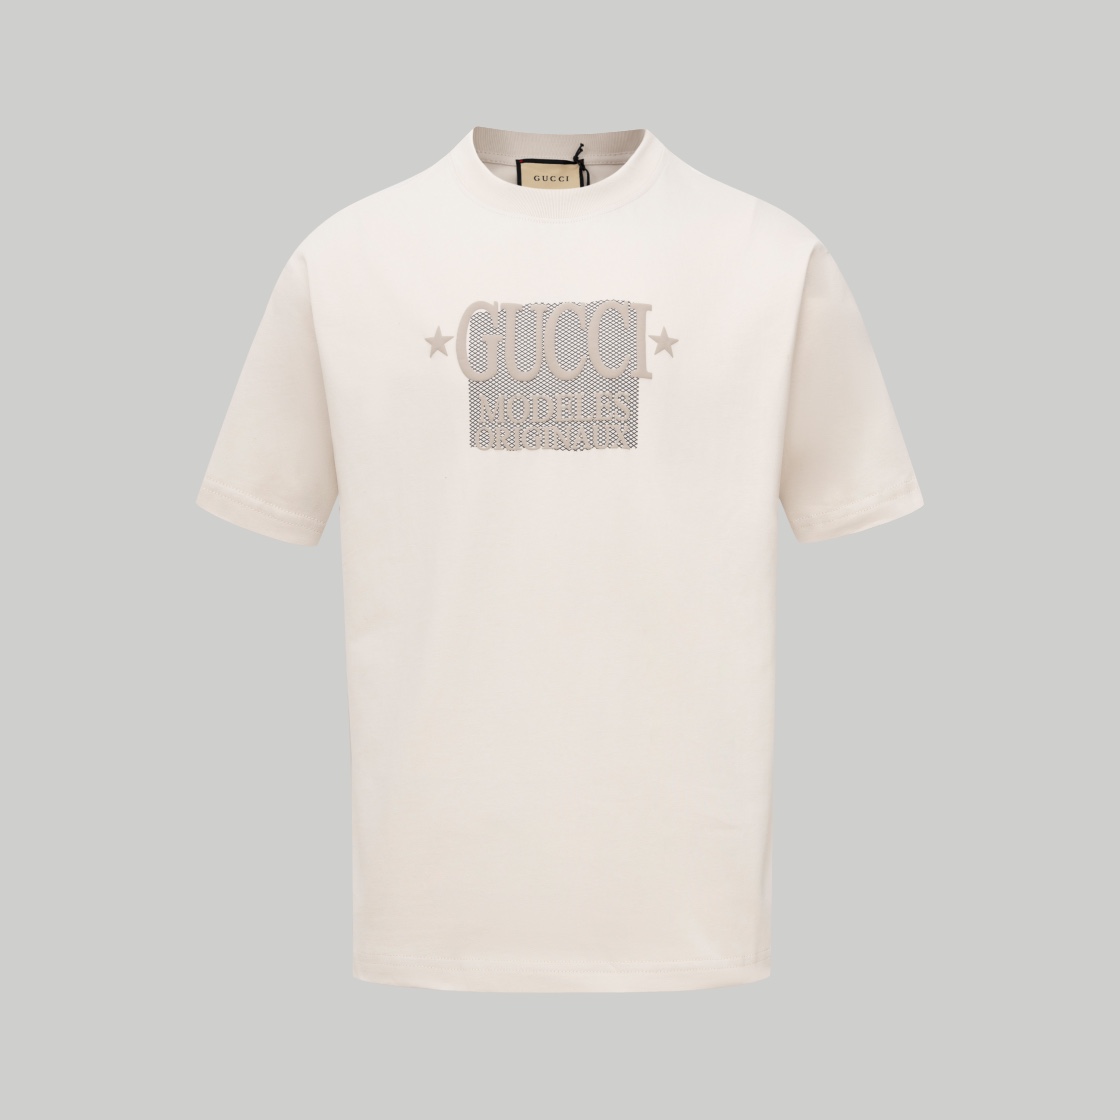 Gucci Clothing T-Shirt Beige Blue Dark Printing Unisex Short Sleeve